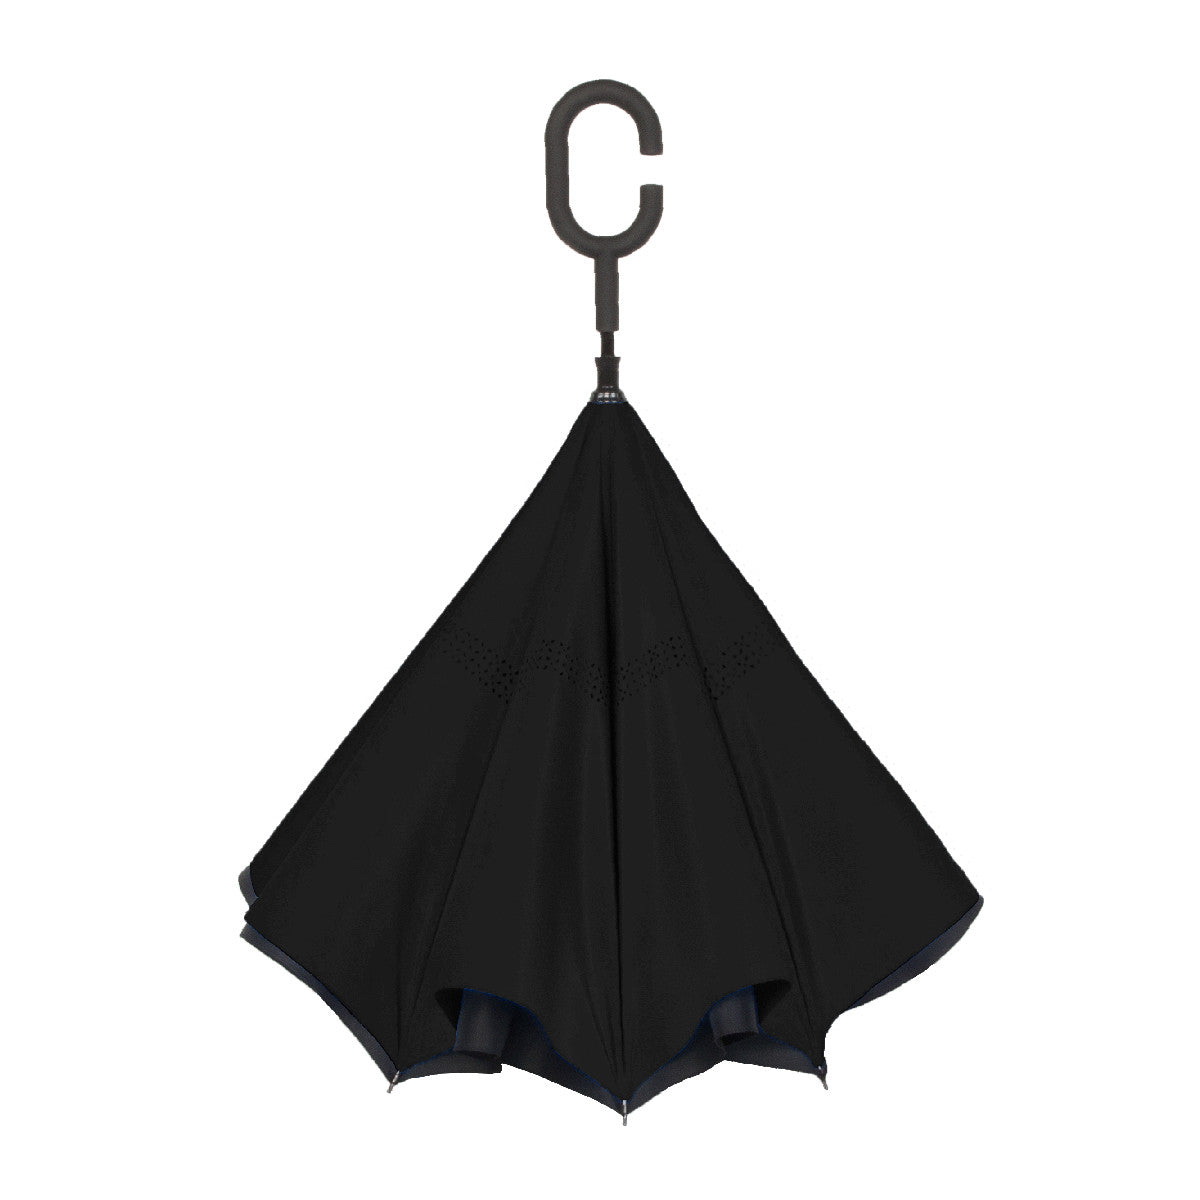 ShedRain UnbelievaBrella 3201-BLK/BLK Umbrella, C Canopy, Polyester Fabric, Black Fabric, 32 in OAH - 3